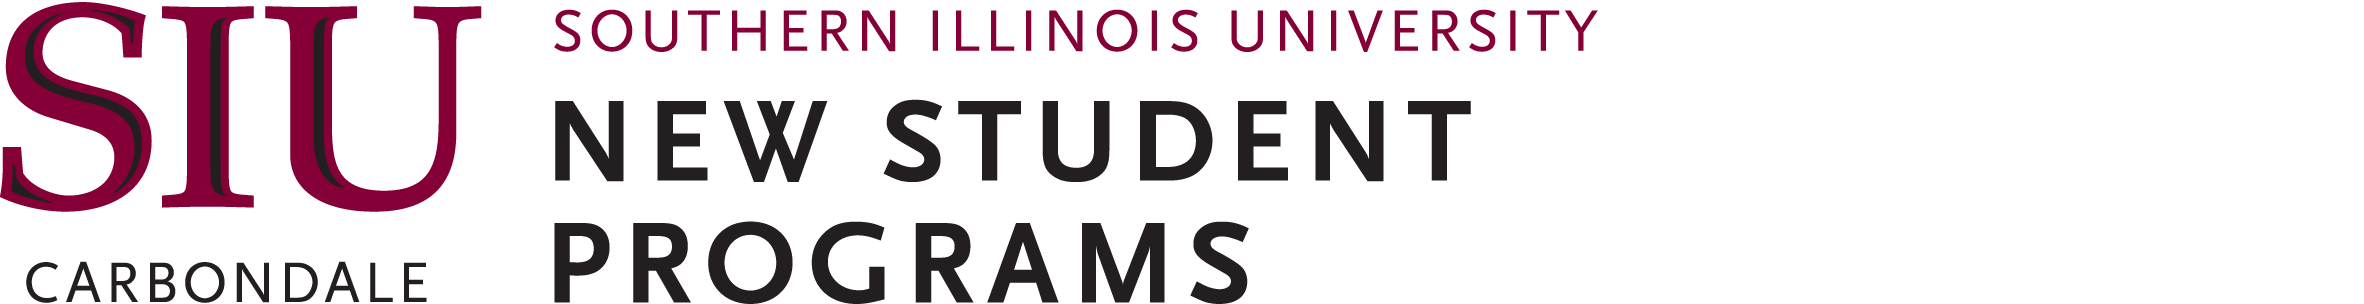 New Student Programs logo